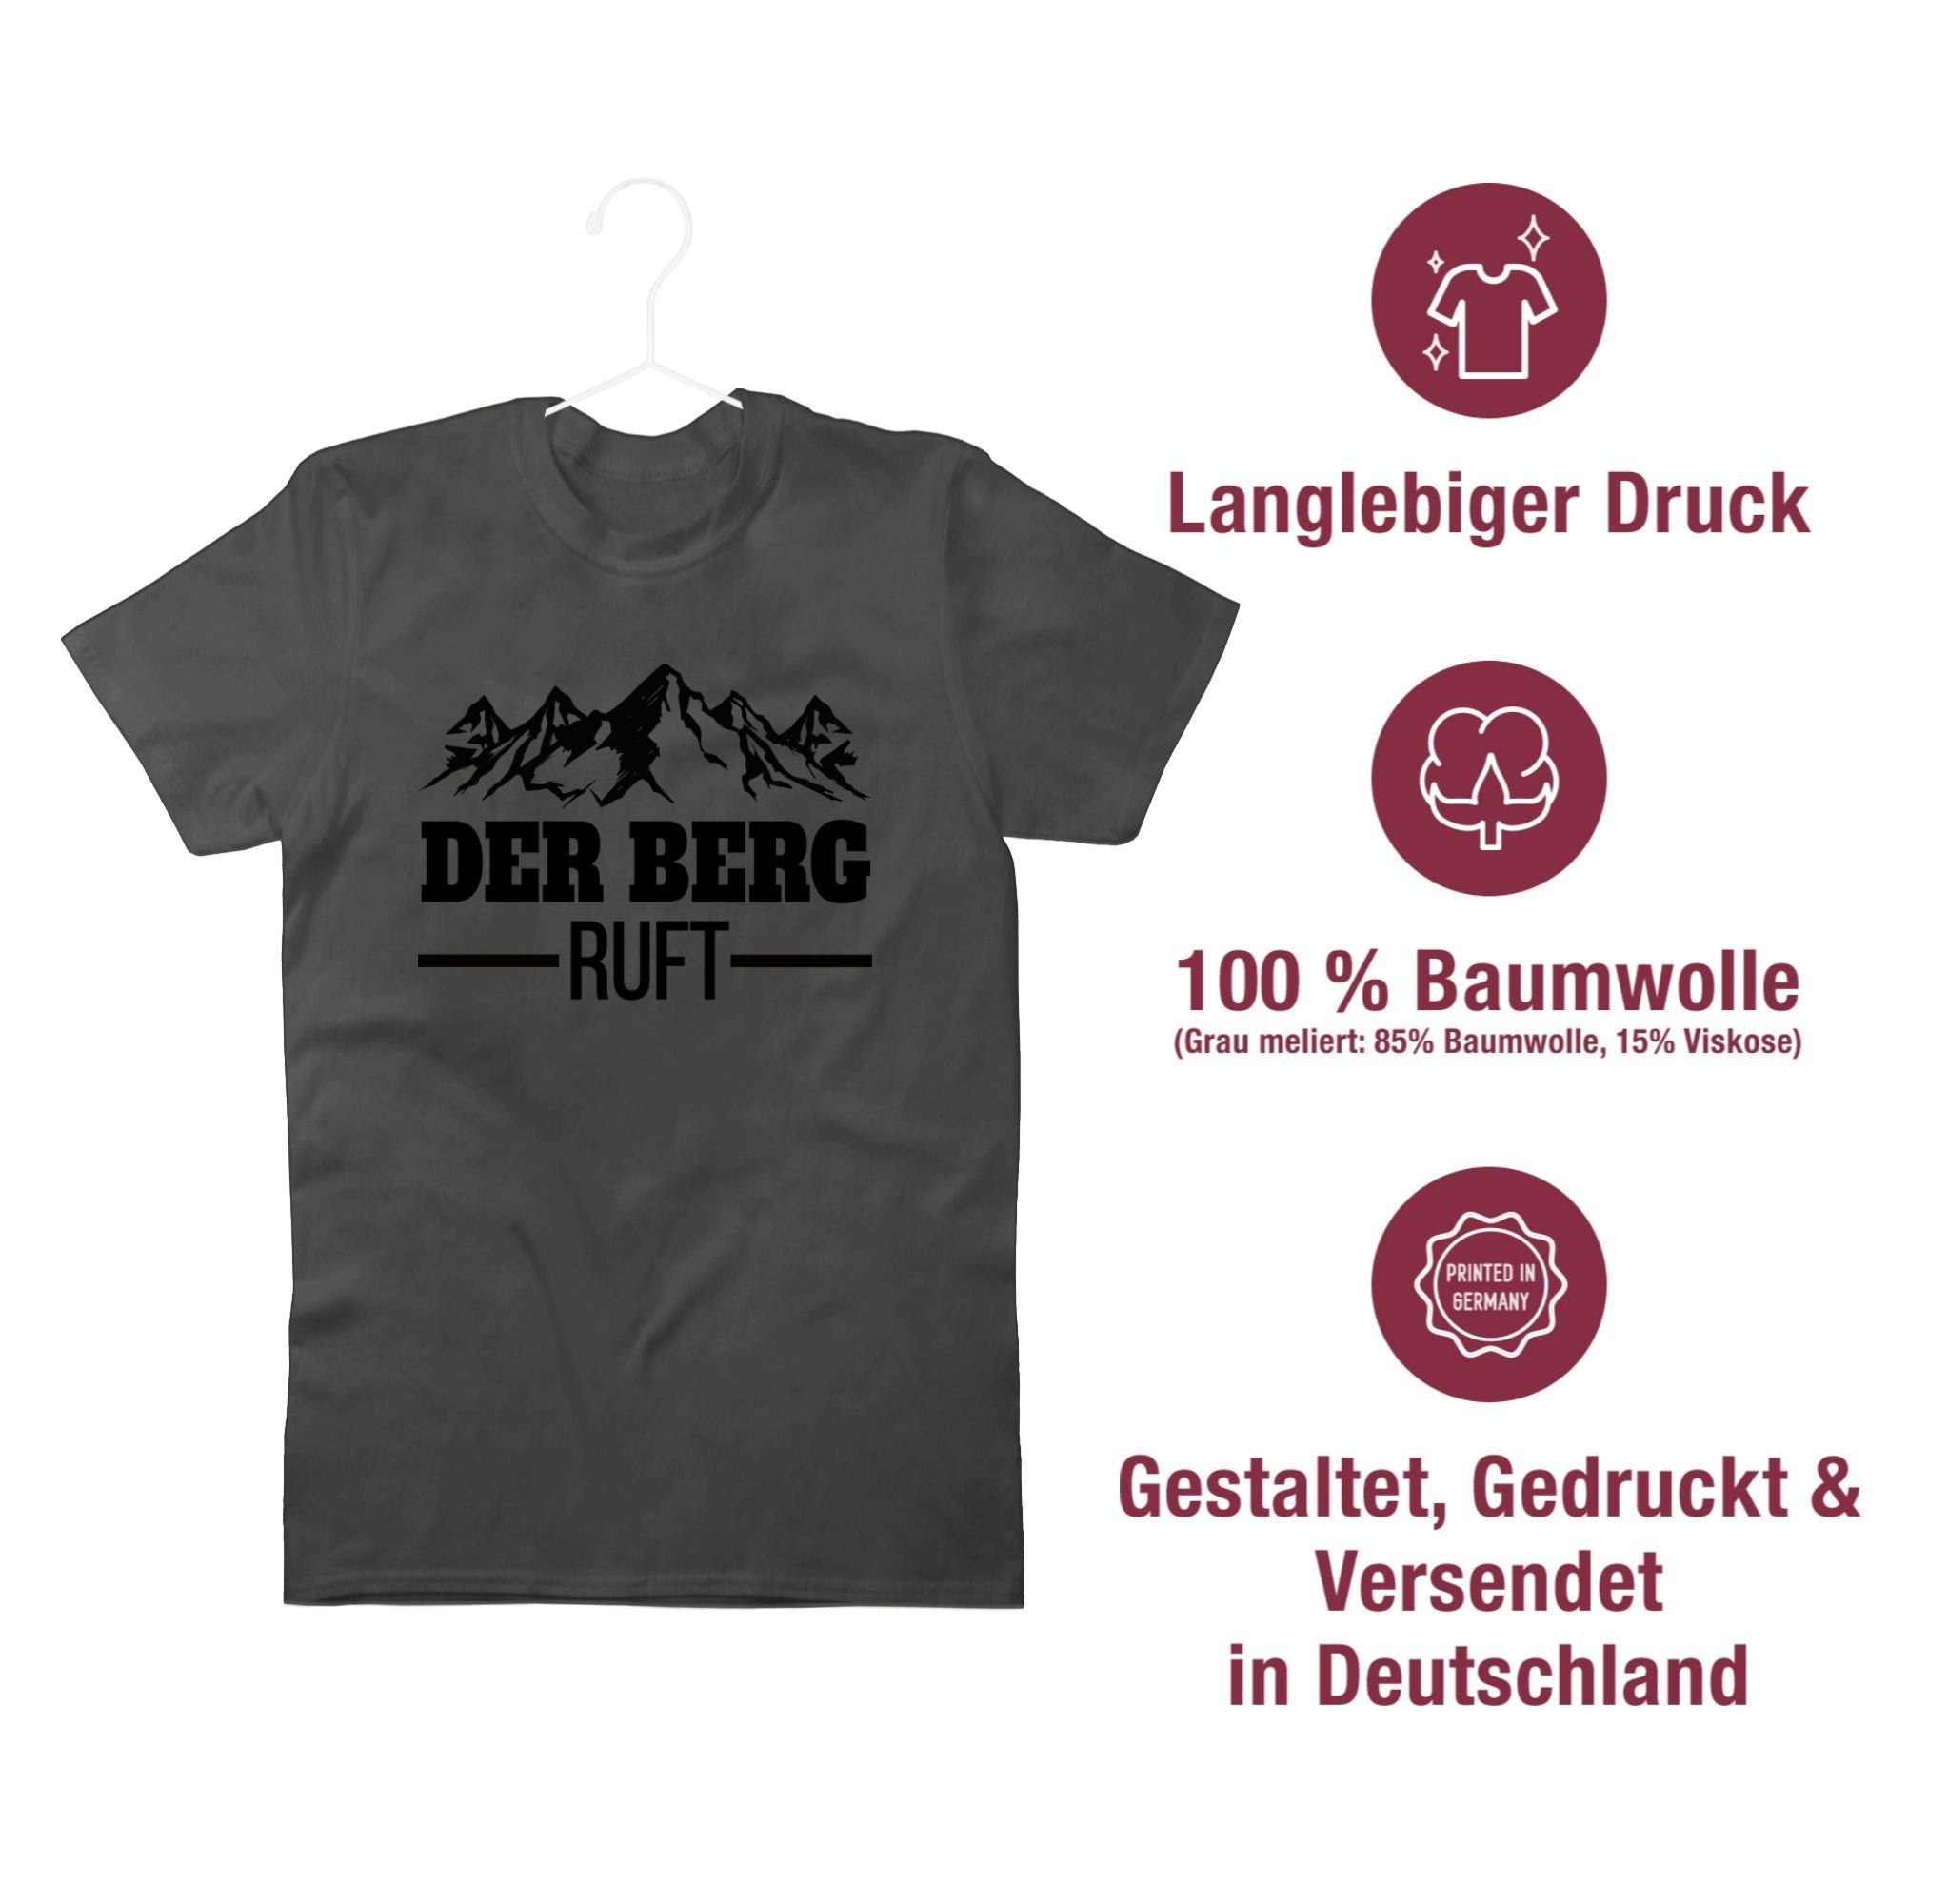 Shirtracer T-Shirt Der Berg Apres ruft 1 schwarz Ski - Party Dunkelgrau